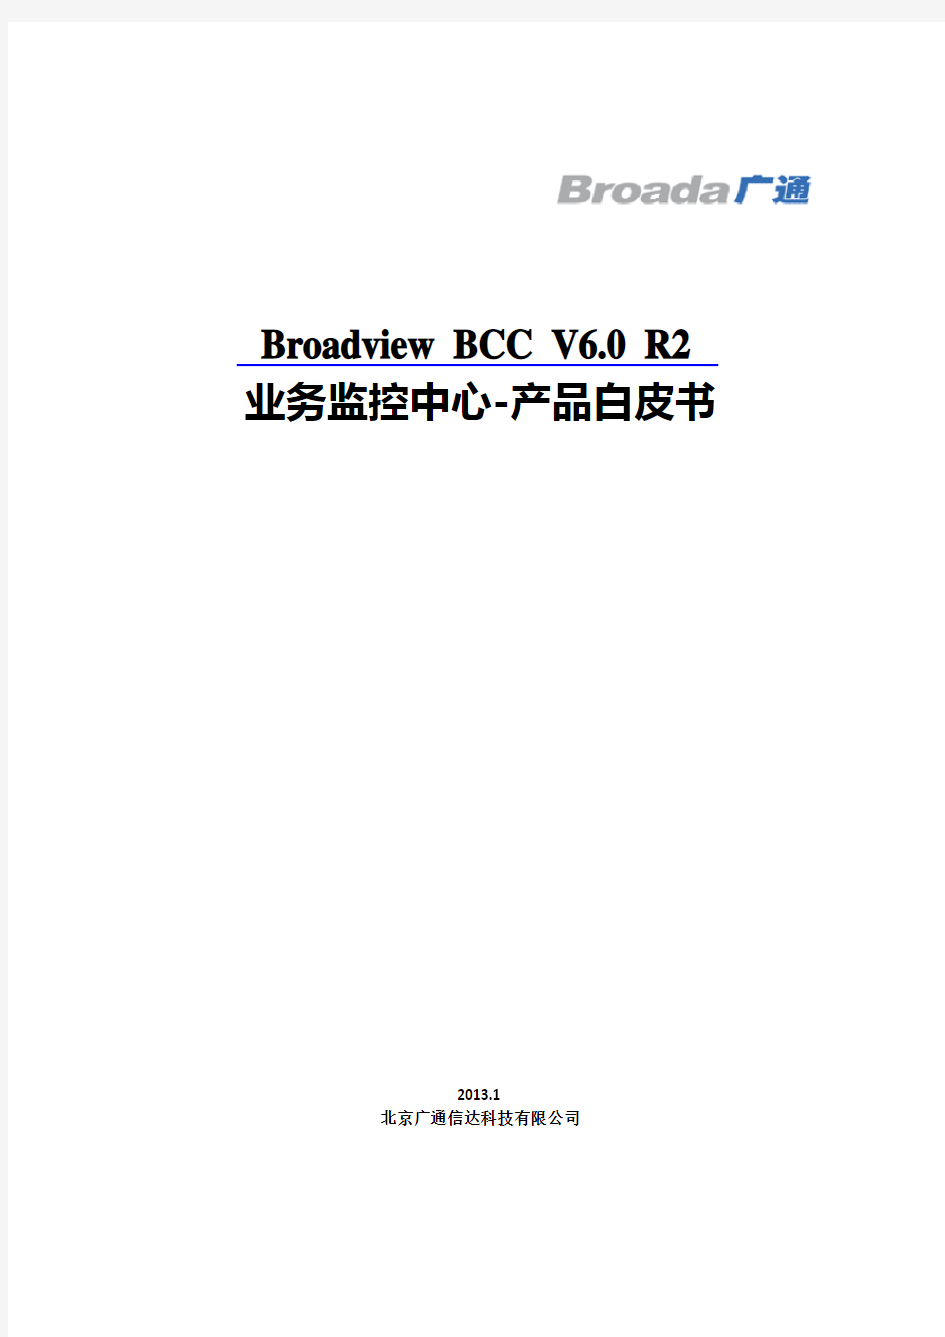 Broadview_BCC_V6.0_R2_产品白皮书